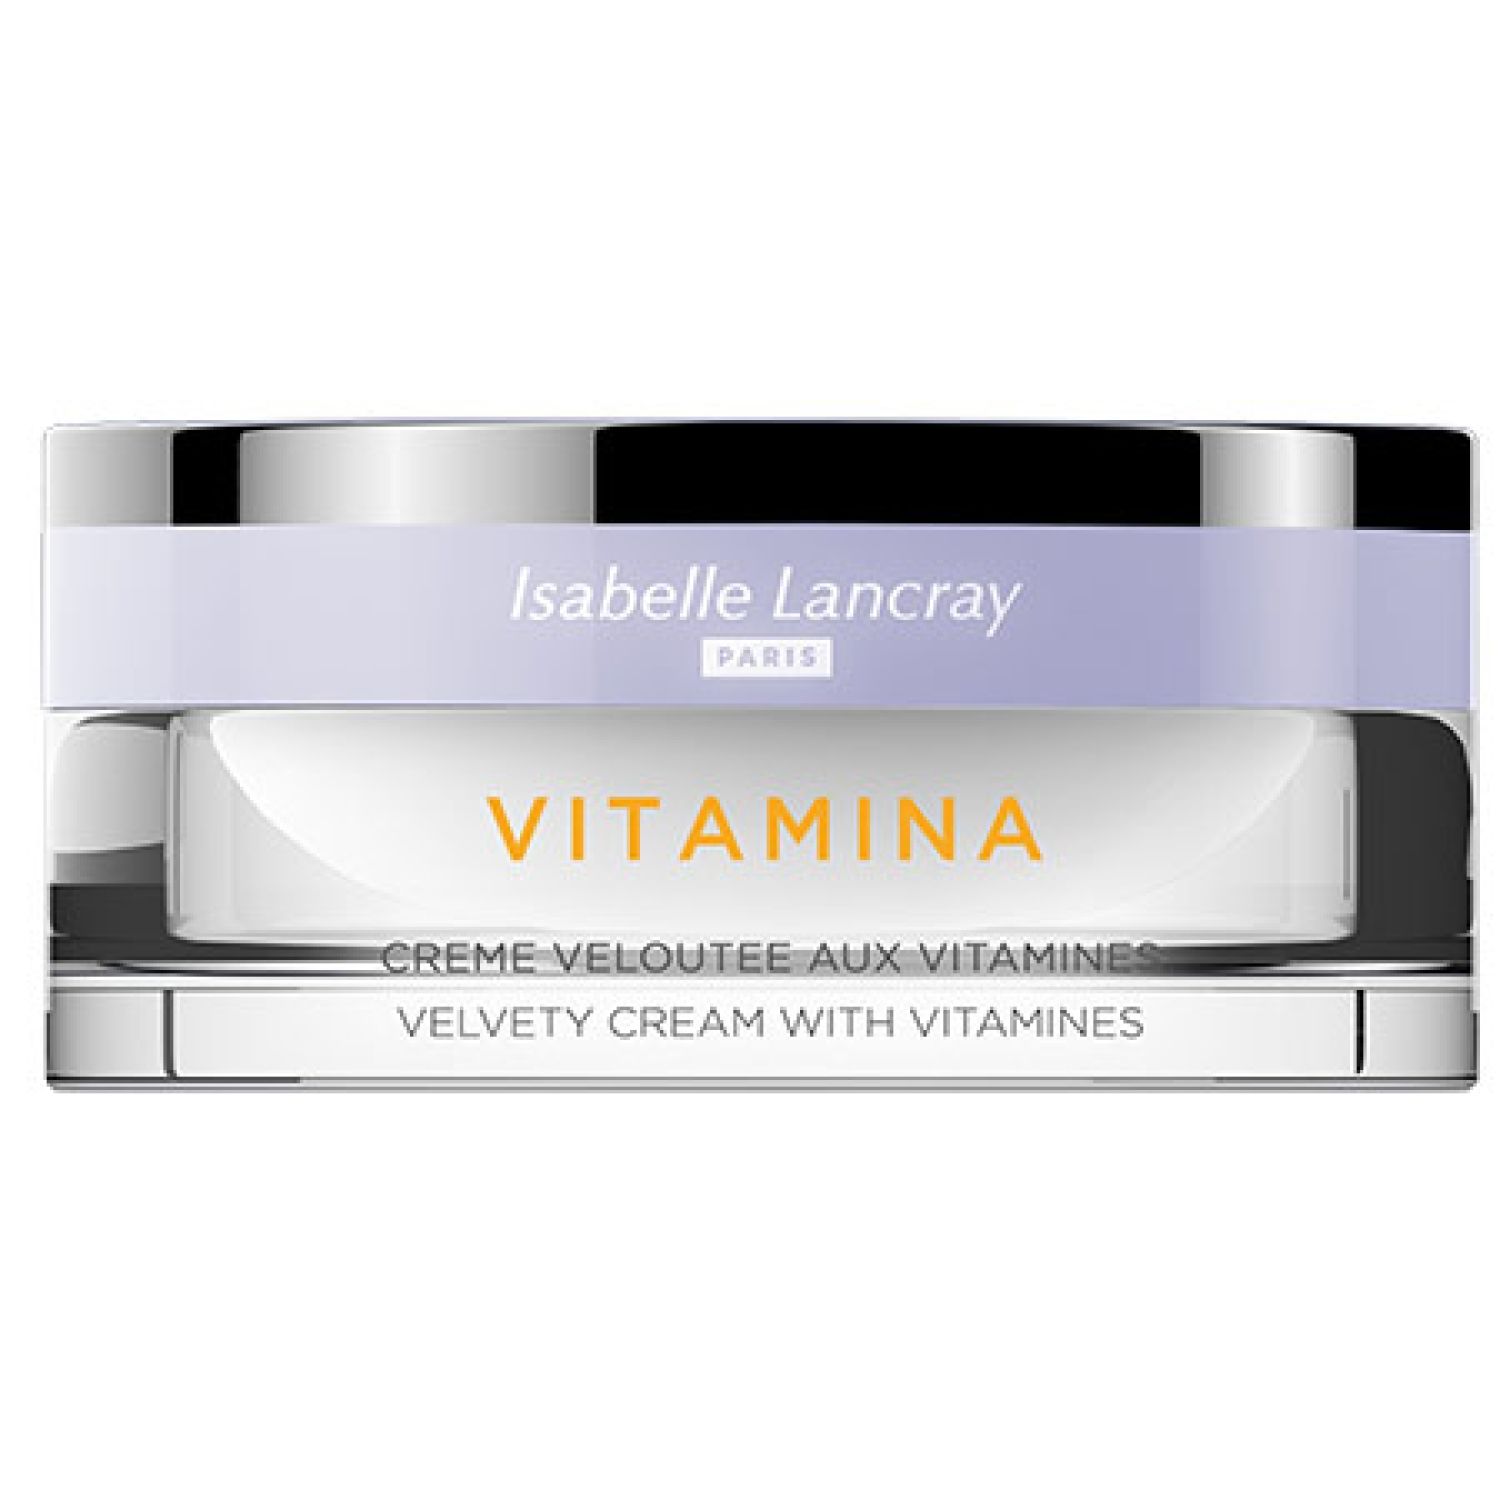 Isabelle Lancray VITAMINA Creme Veloutee aux Vitamines